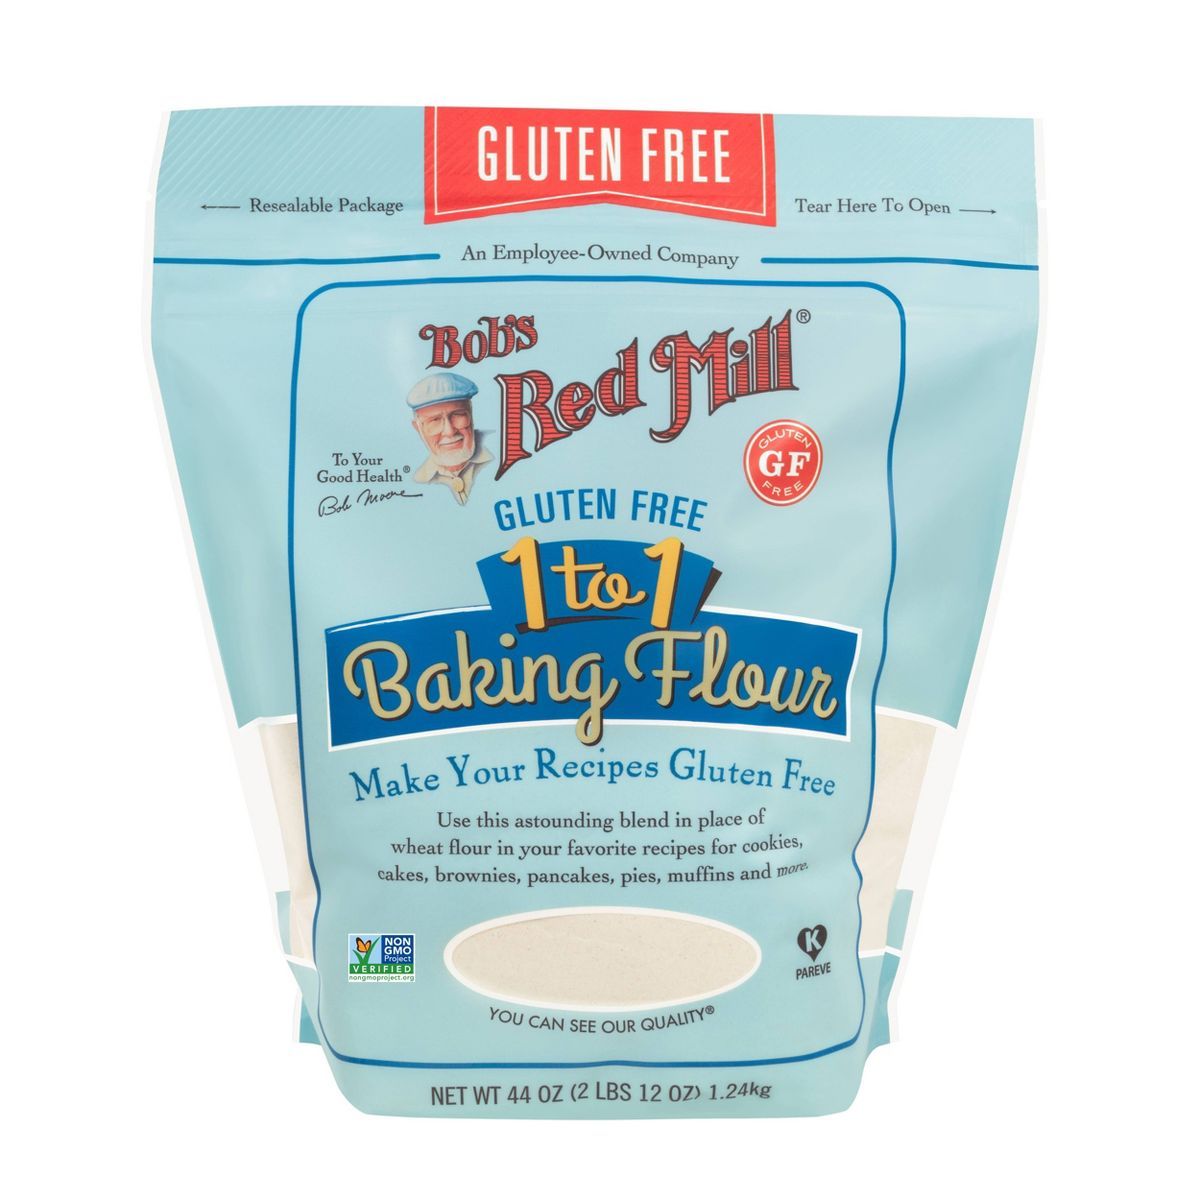 Bob's Red Mill Gluten Free 1-to-1 Baking Flour - 44oz | Target